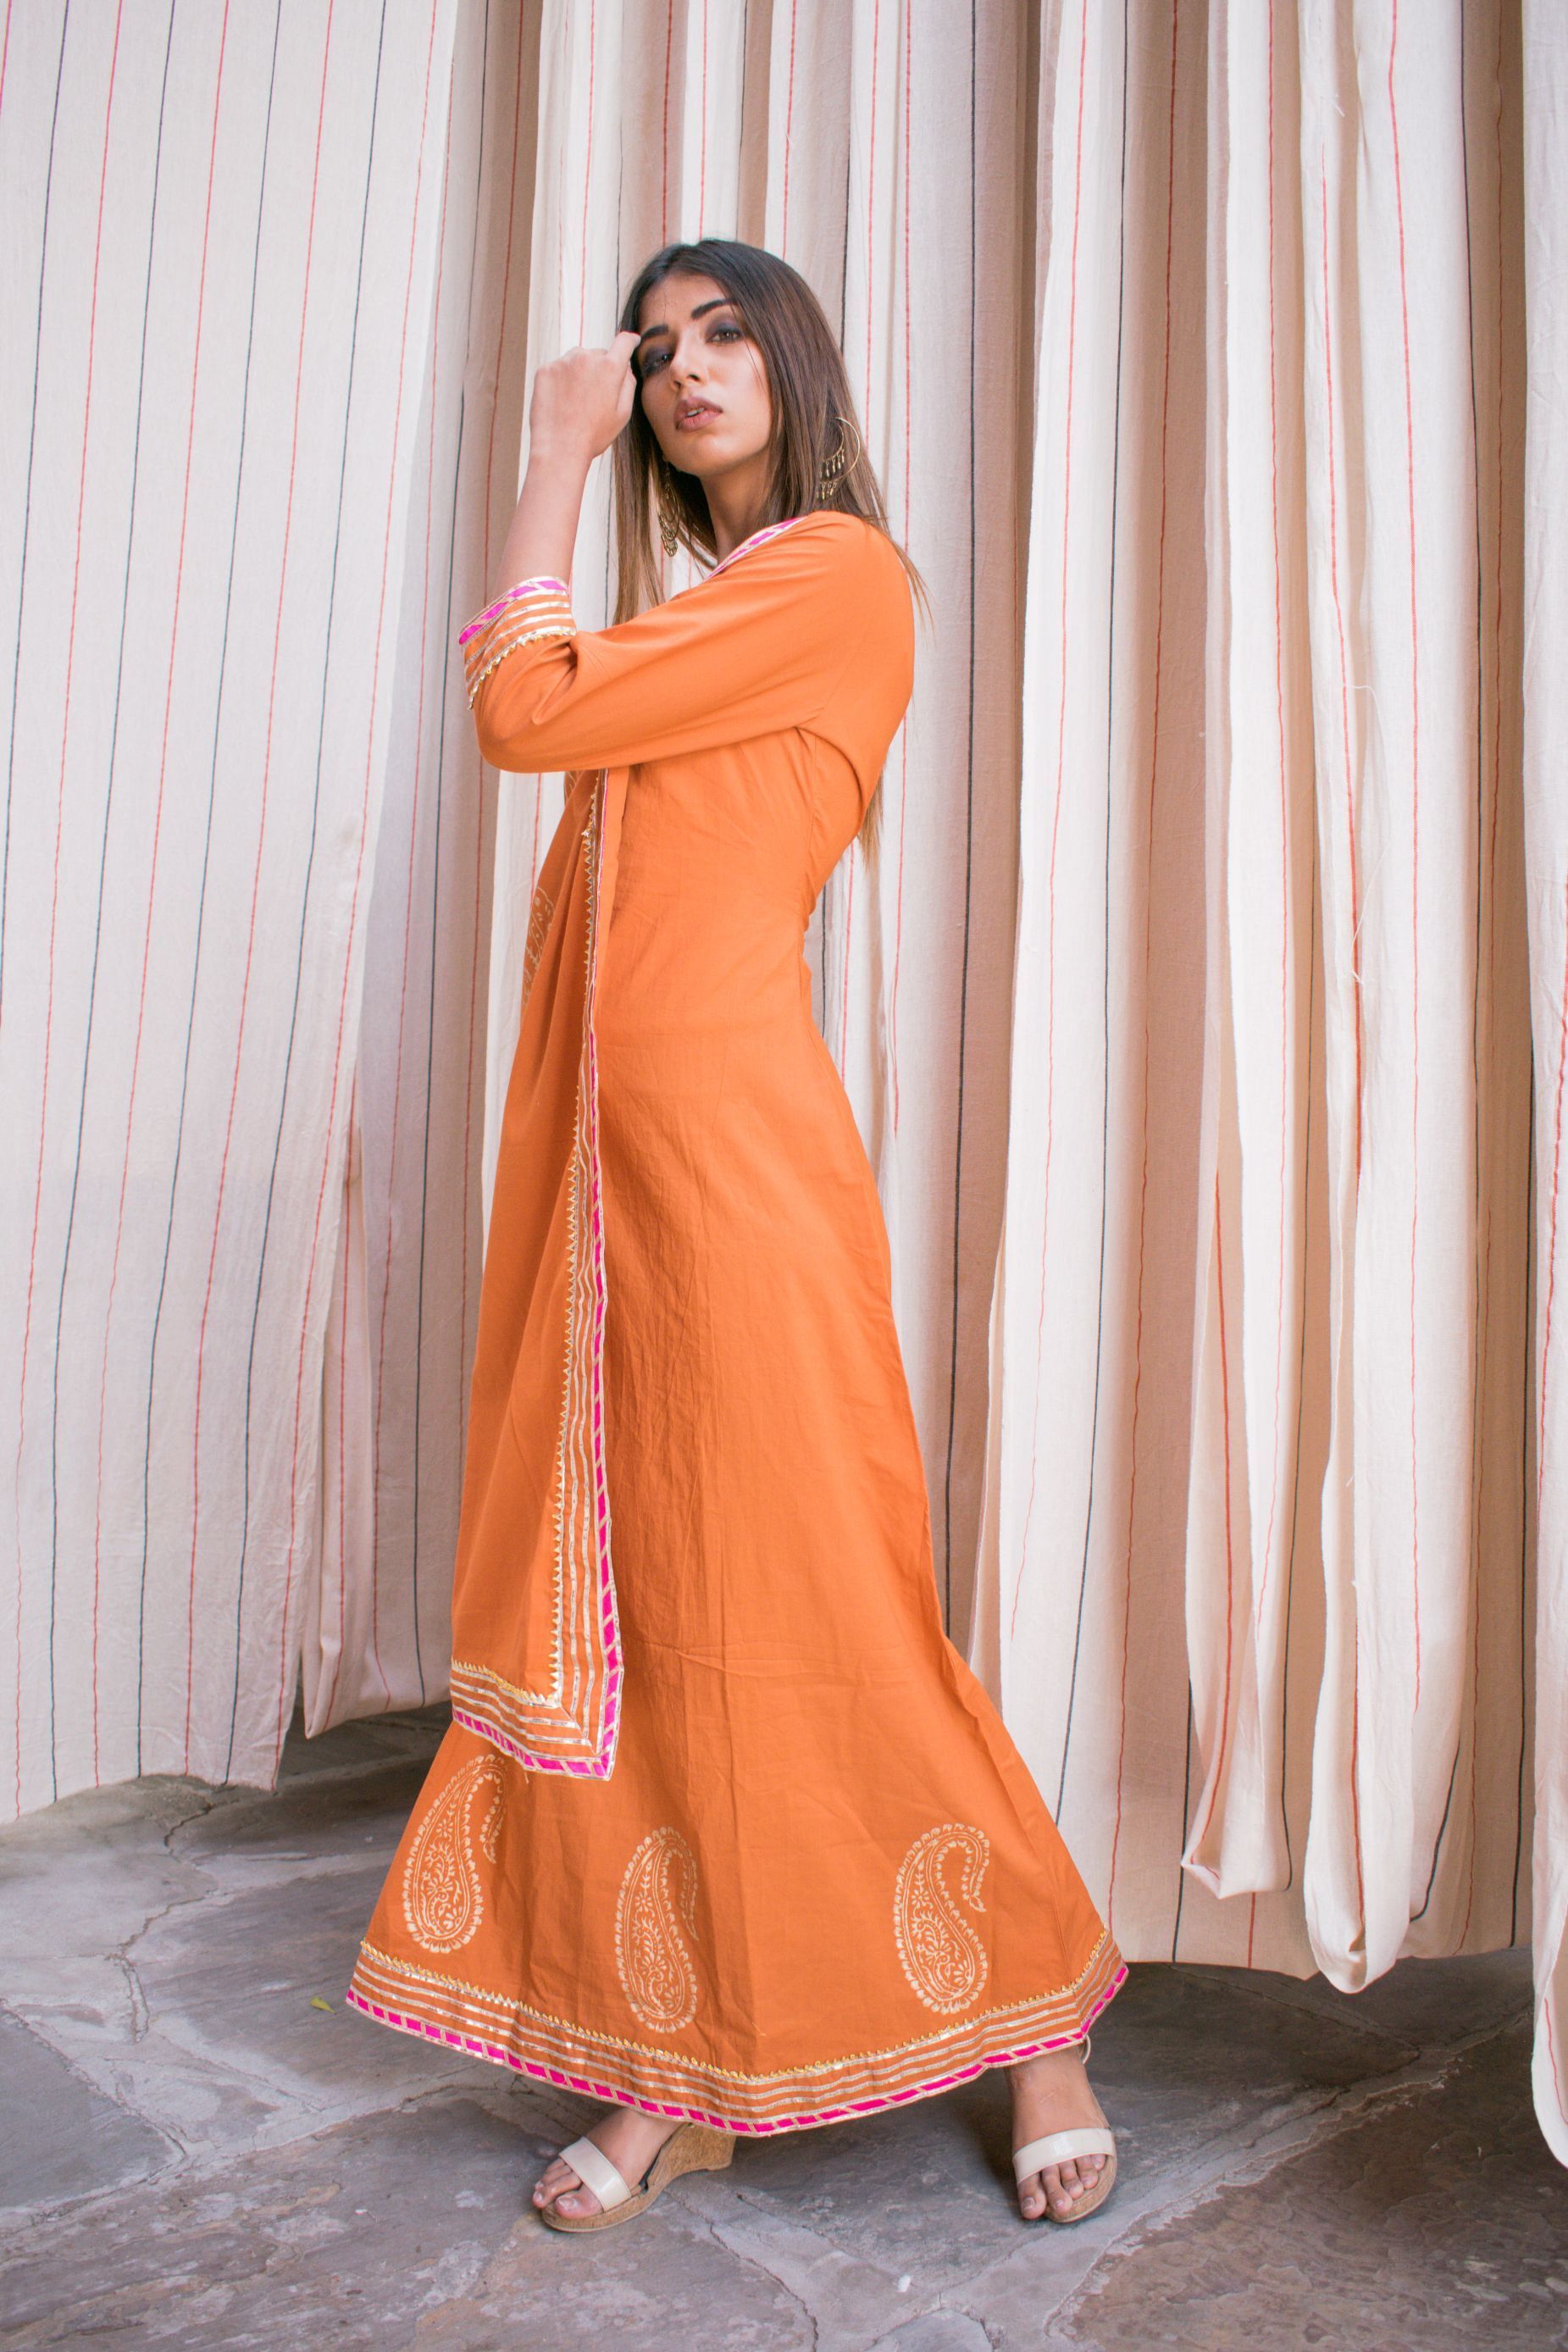 Women's Single-Piece Orange Cotton Dress With Hand Block Printed Motifs. - Saras The Label